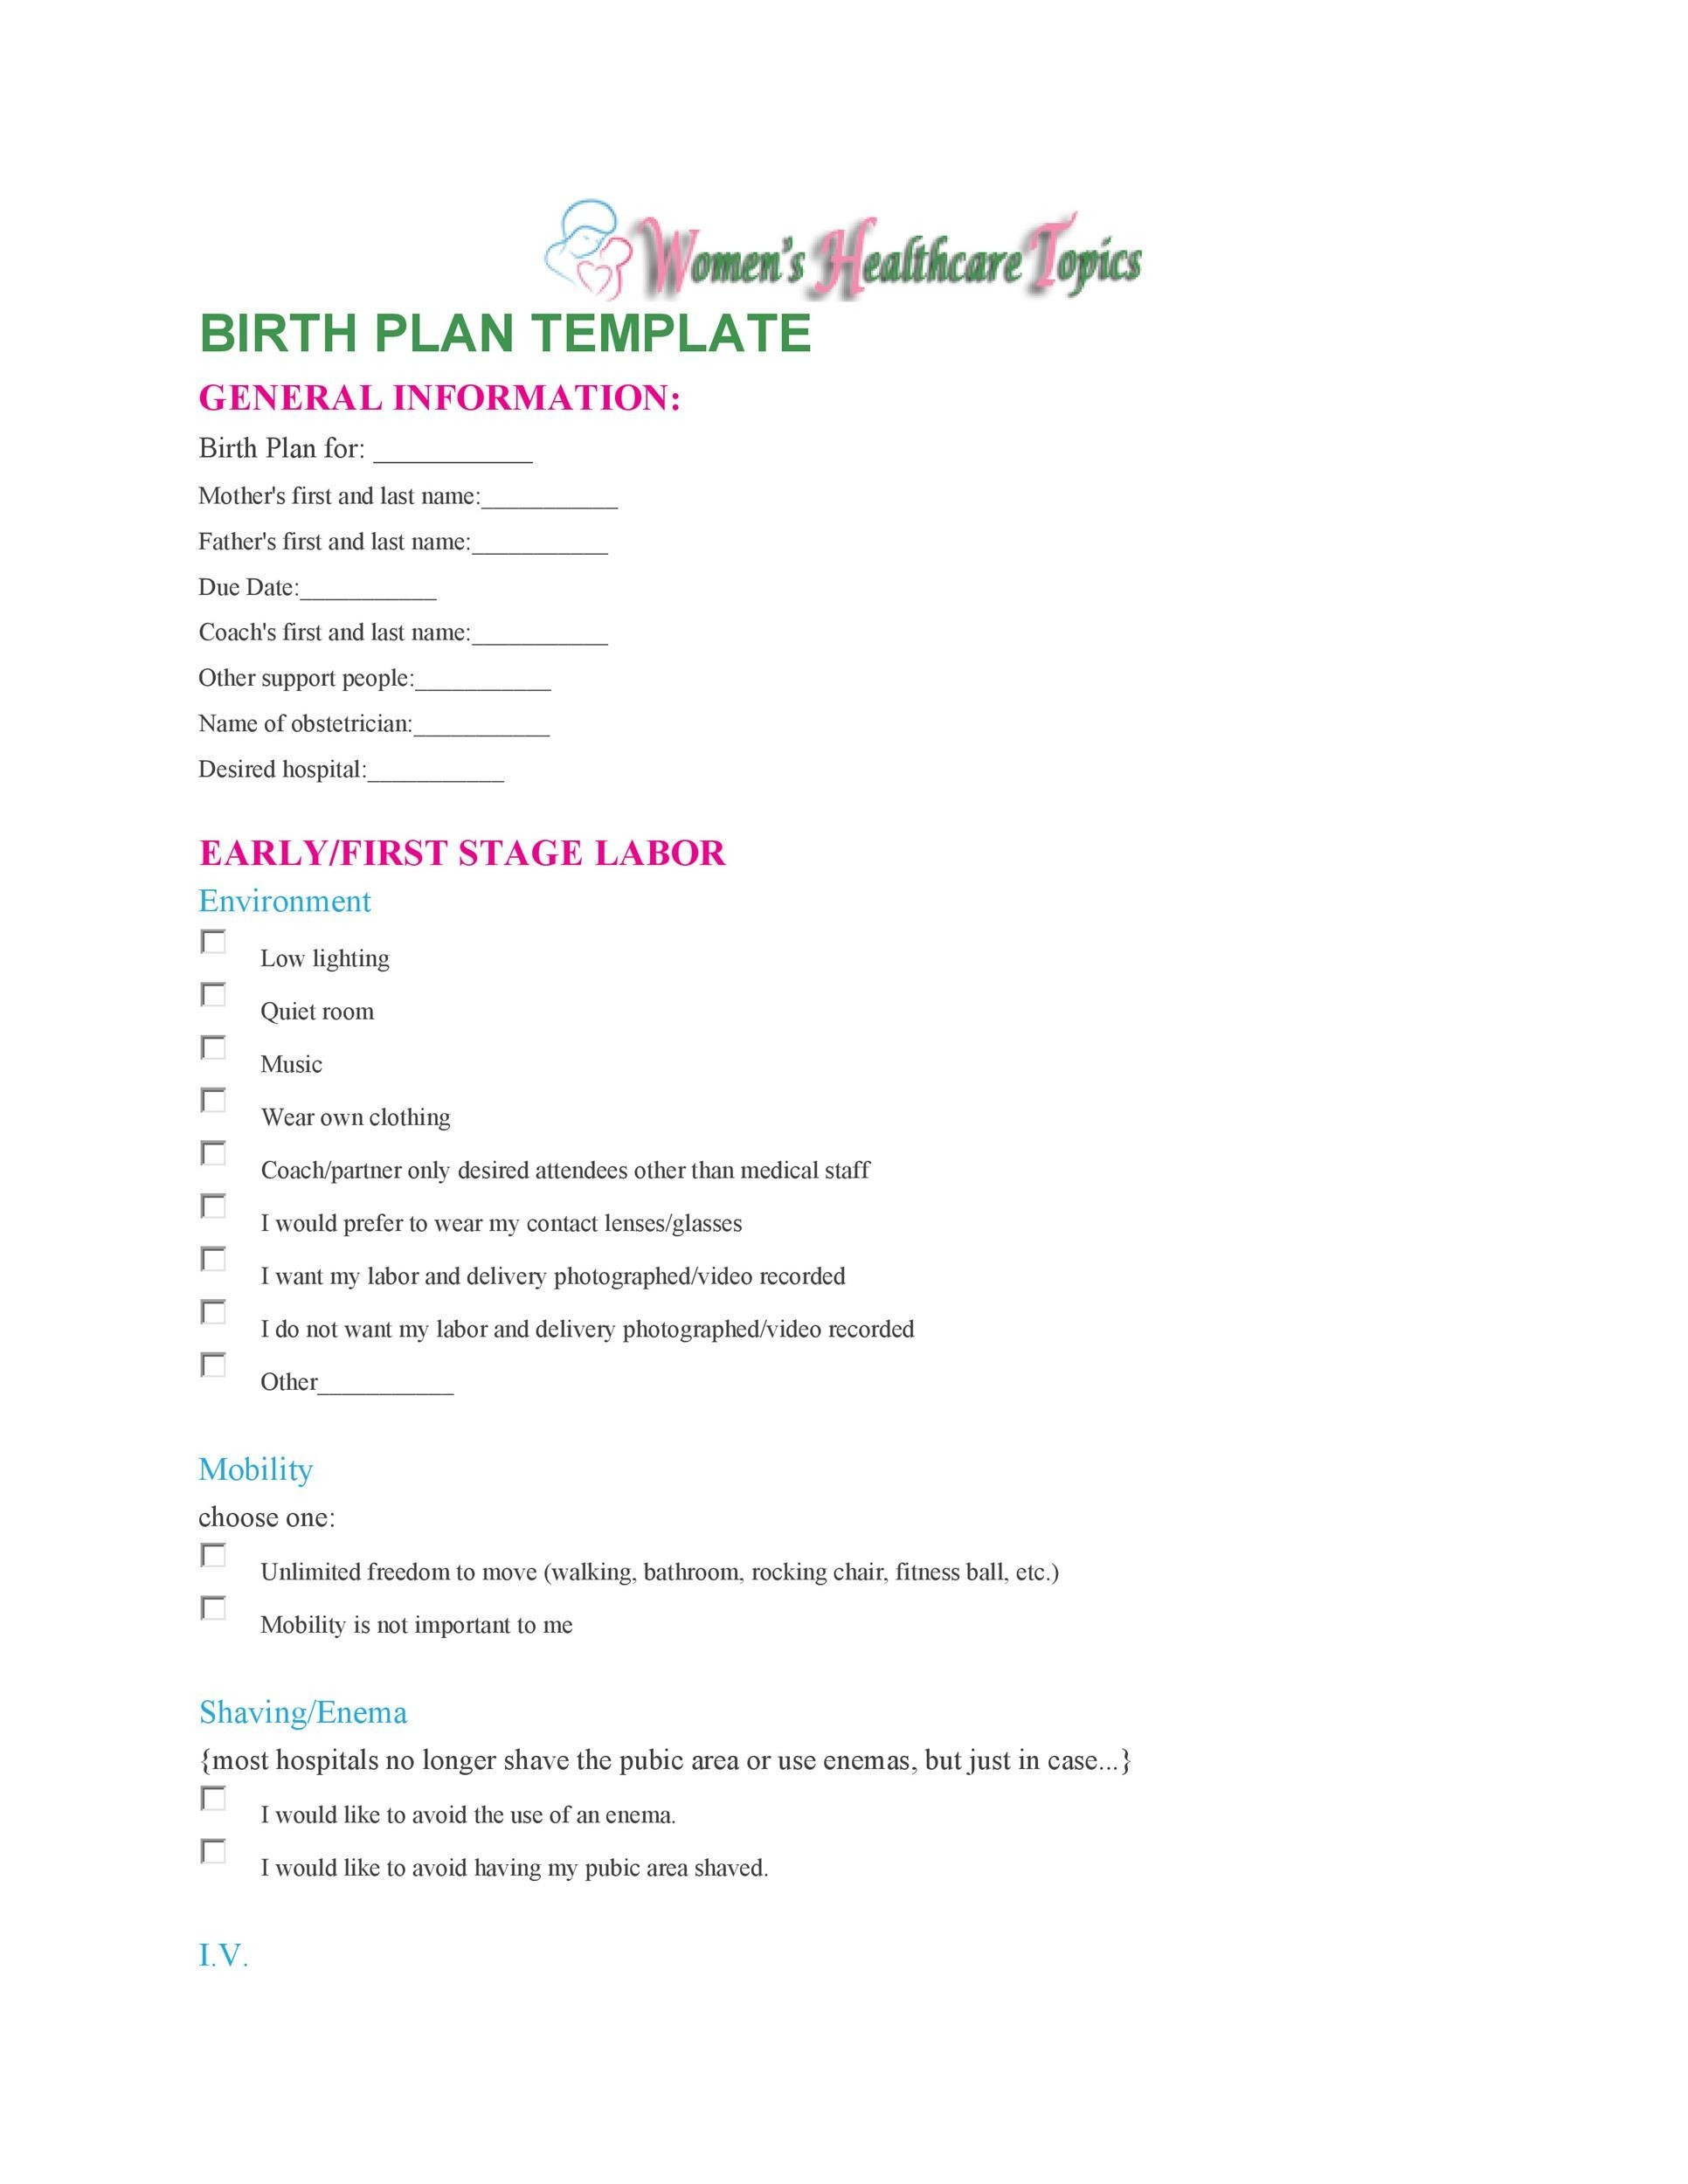 Free Birth Plan Template 46